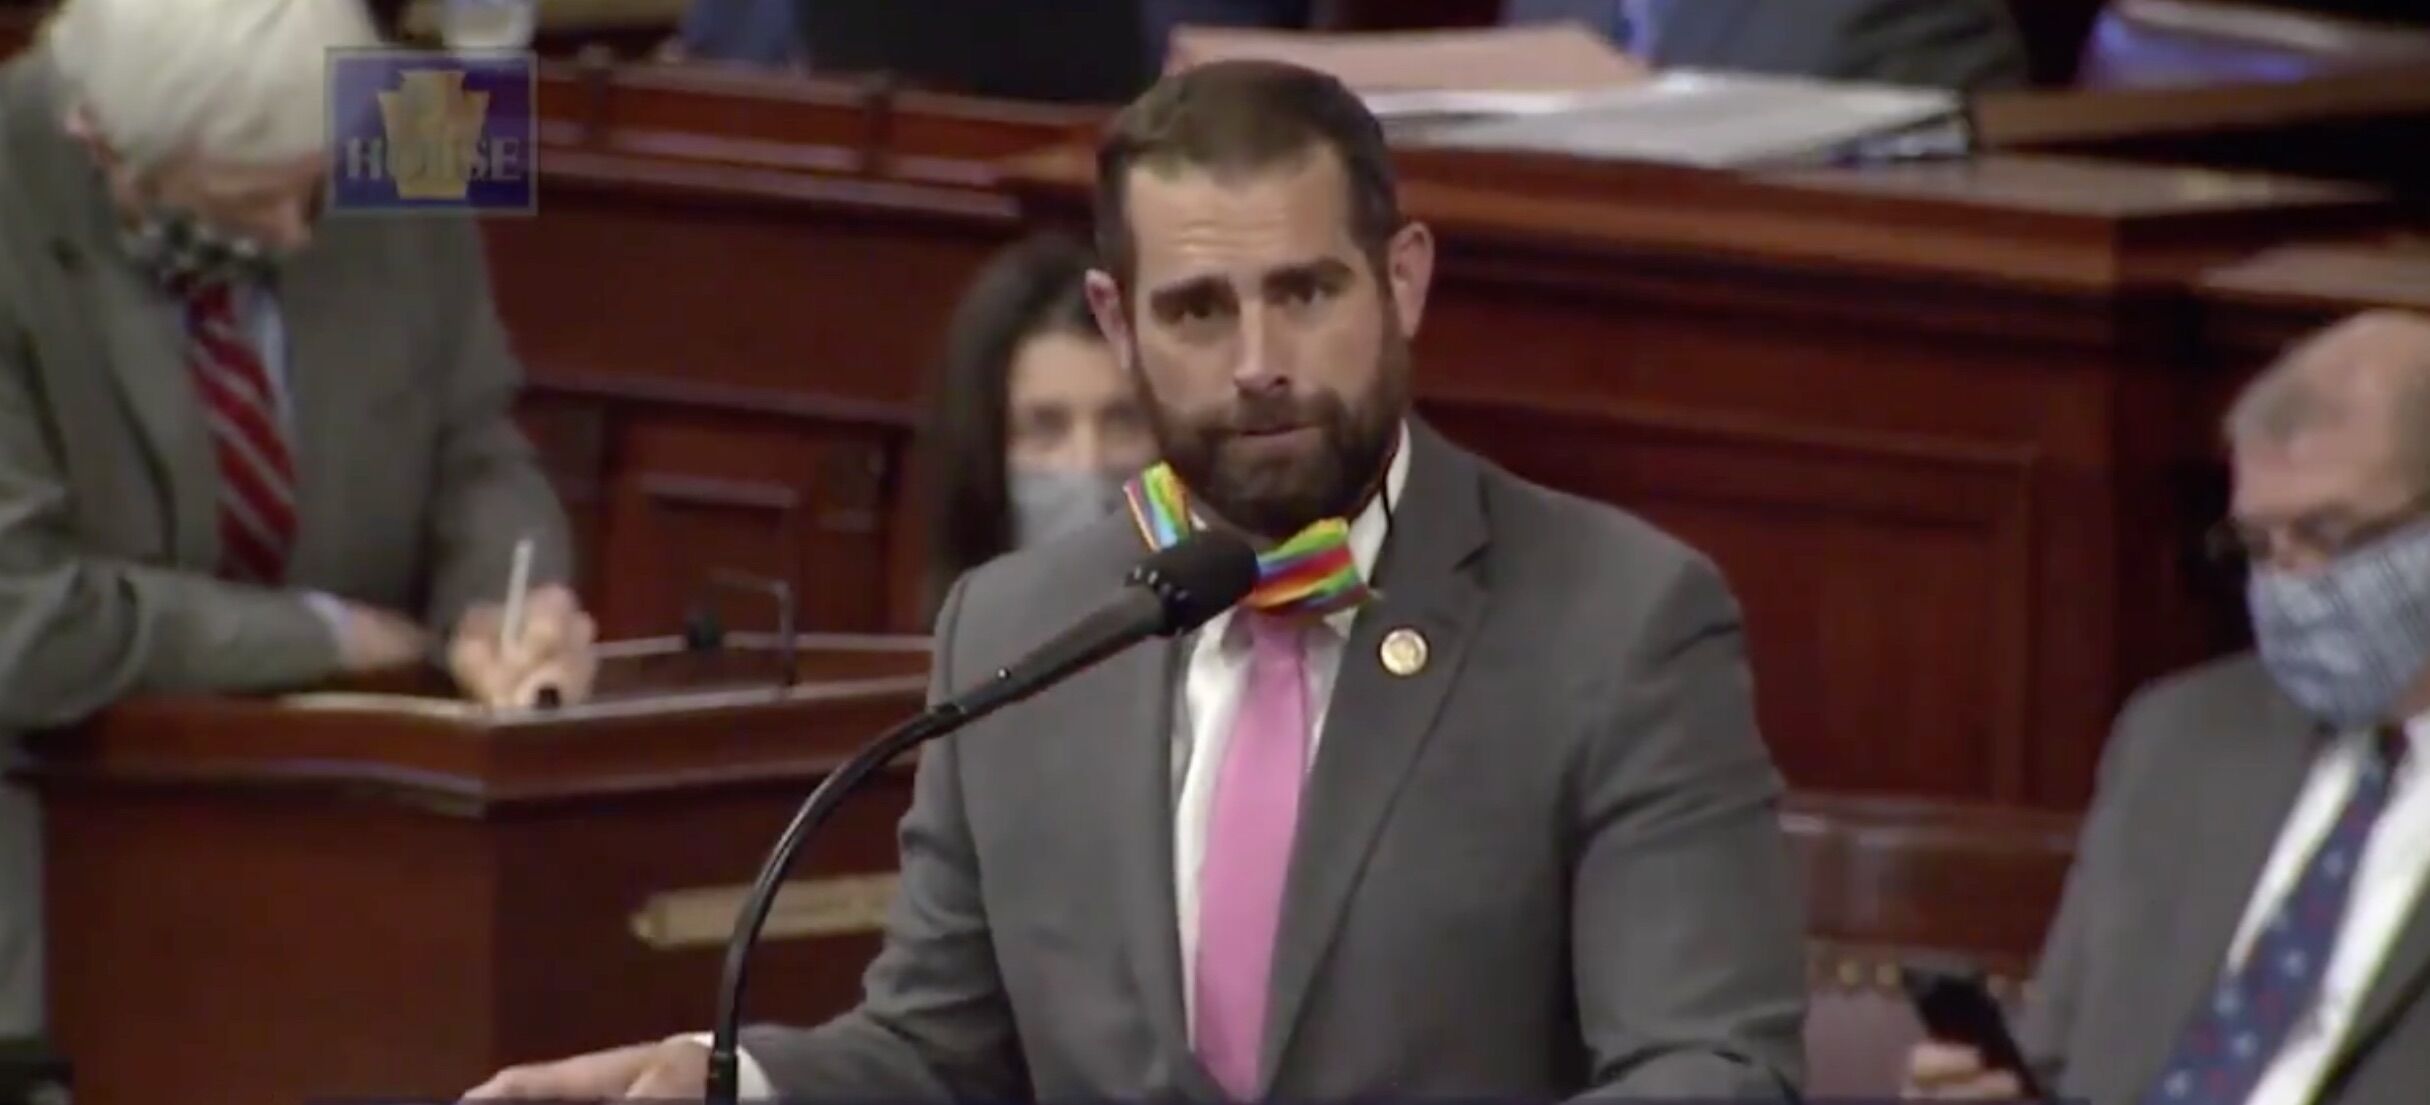 Out Pennsylvania state legislator Brian Sims speaks on the House floor